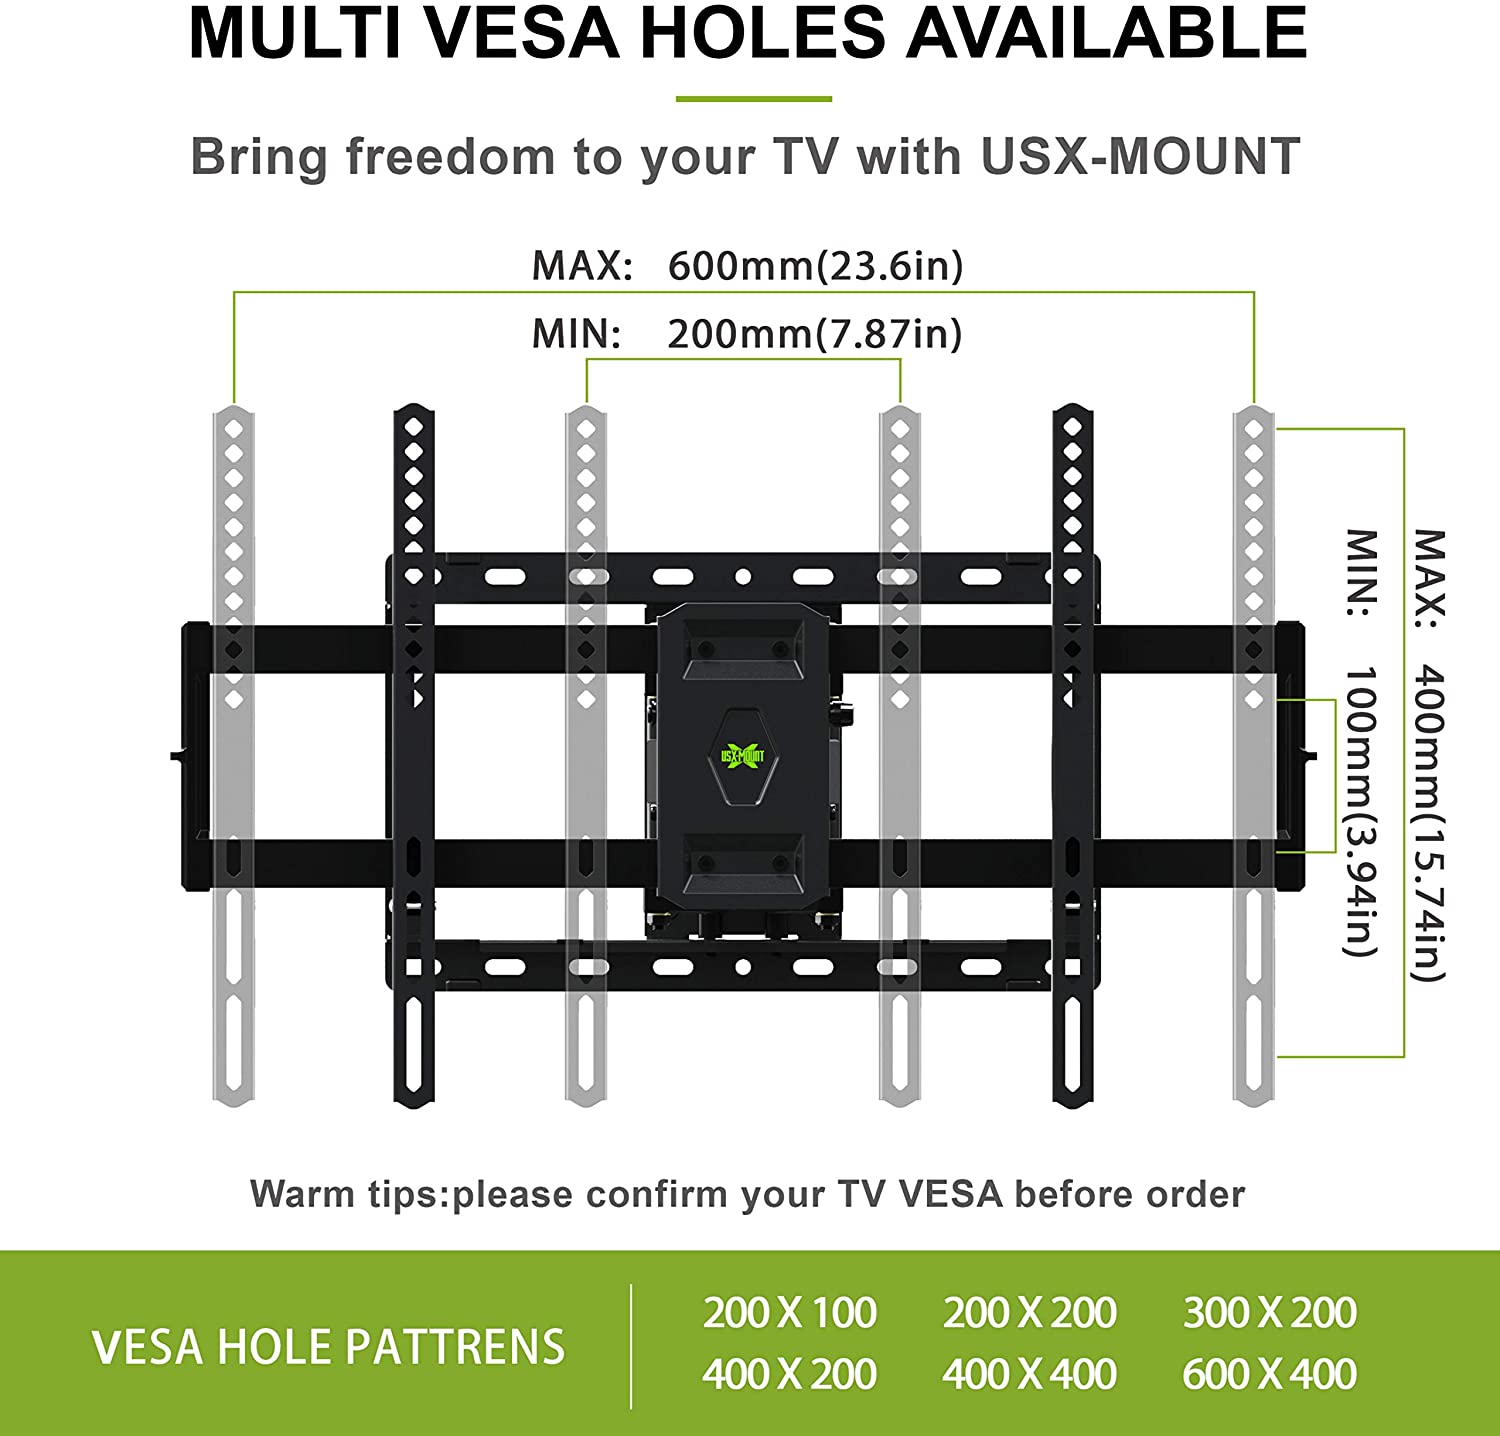 VESA Mount Guide: What Is the VESA Standard